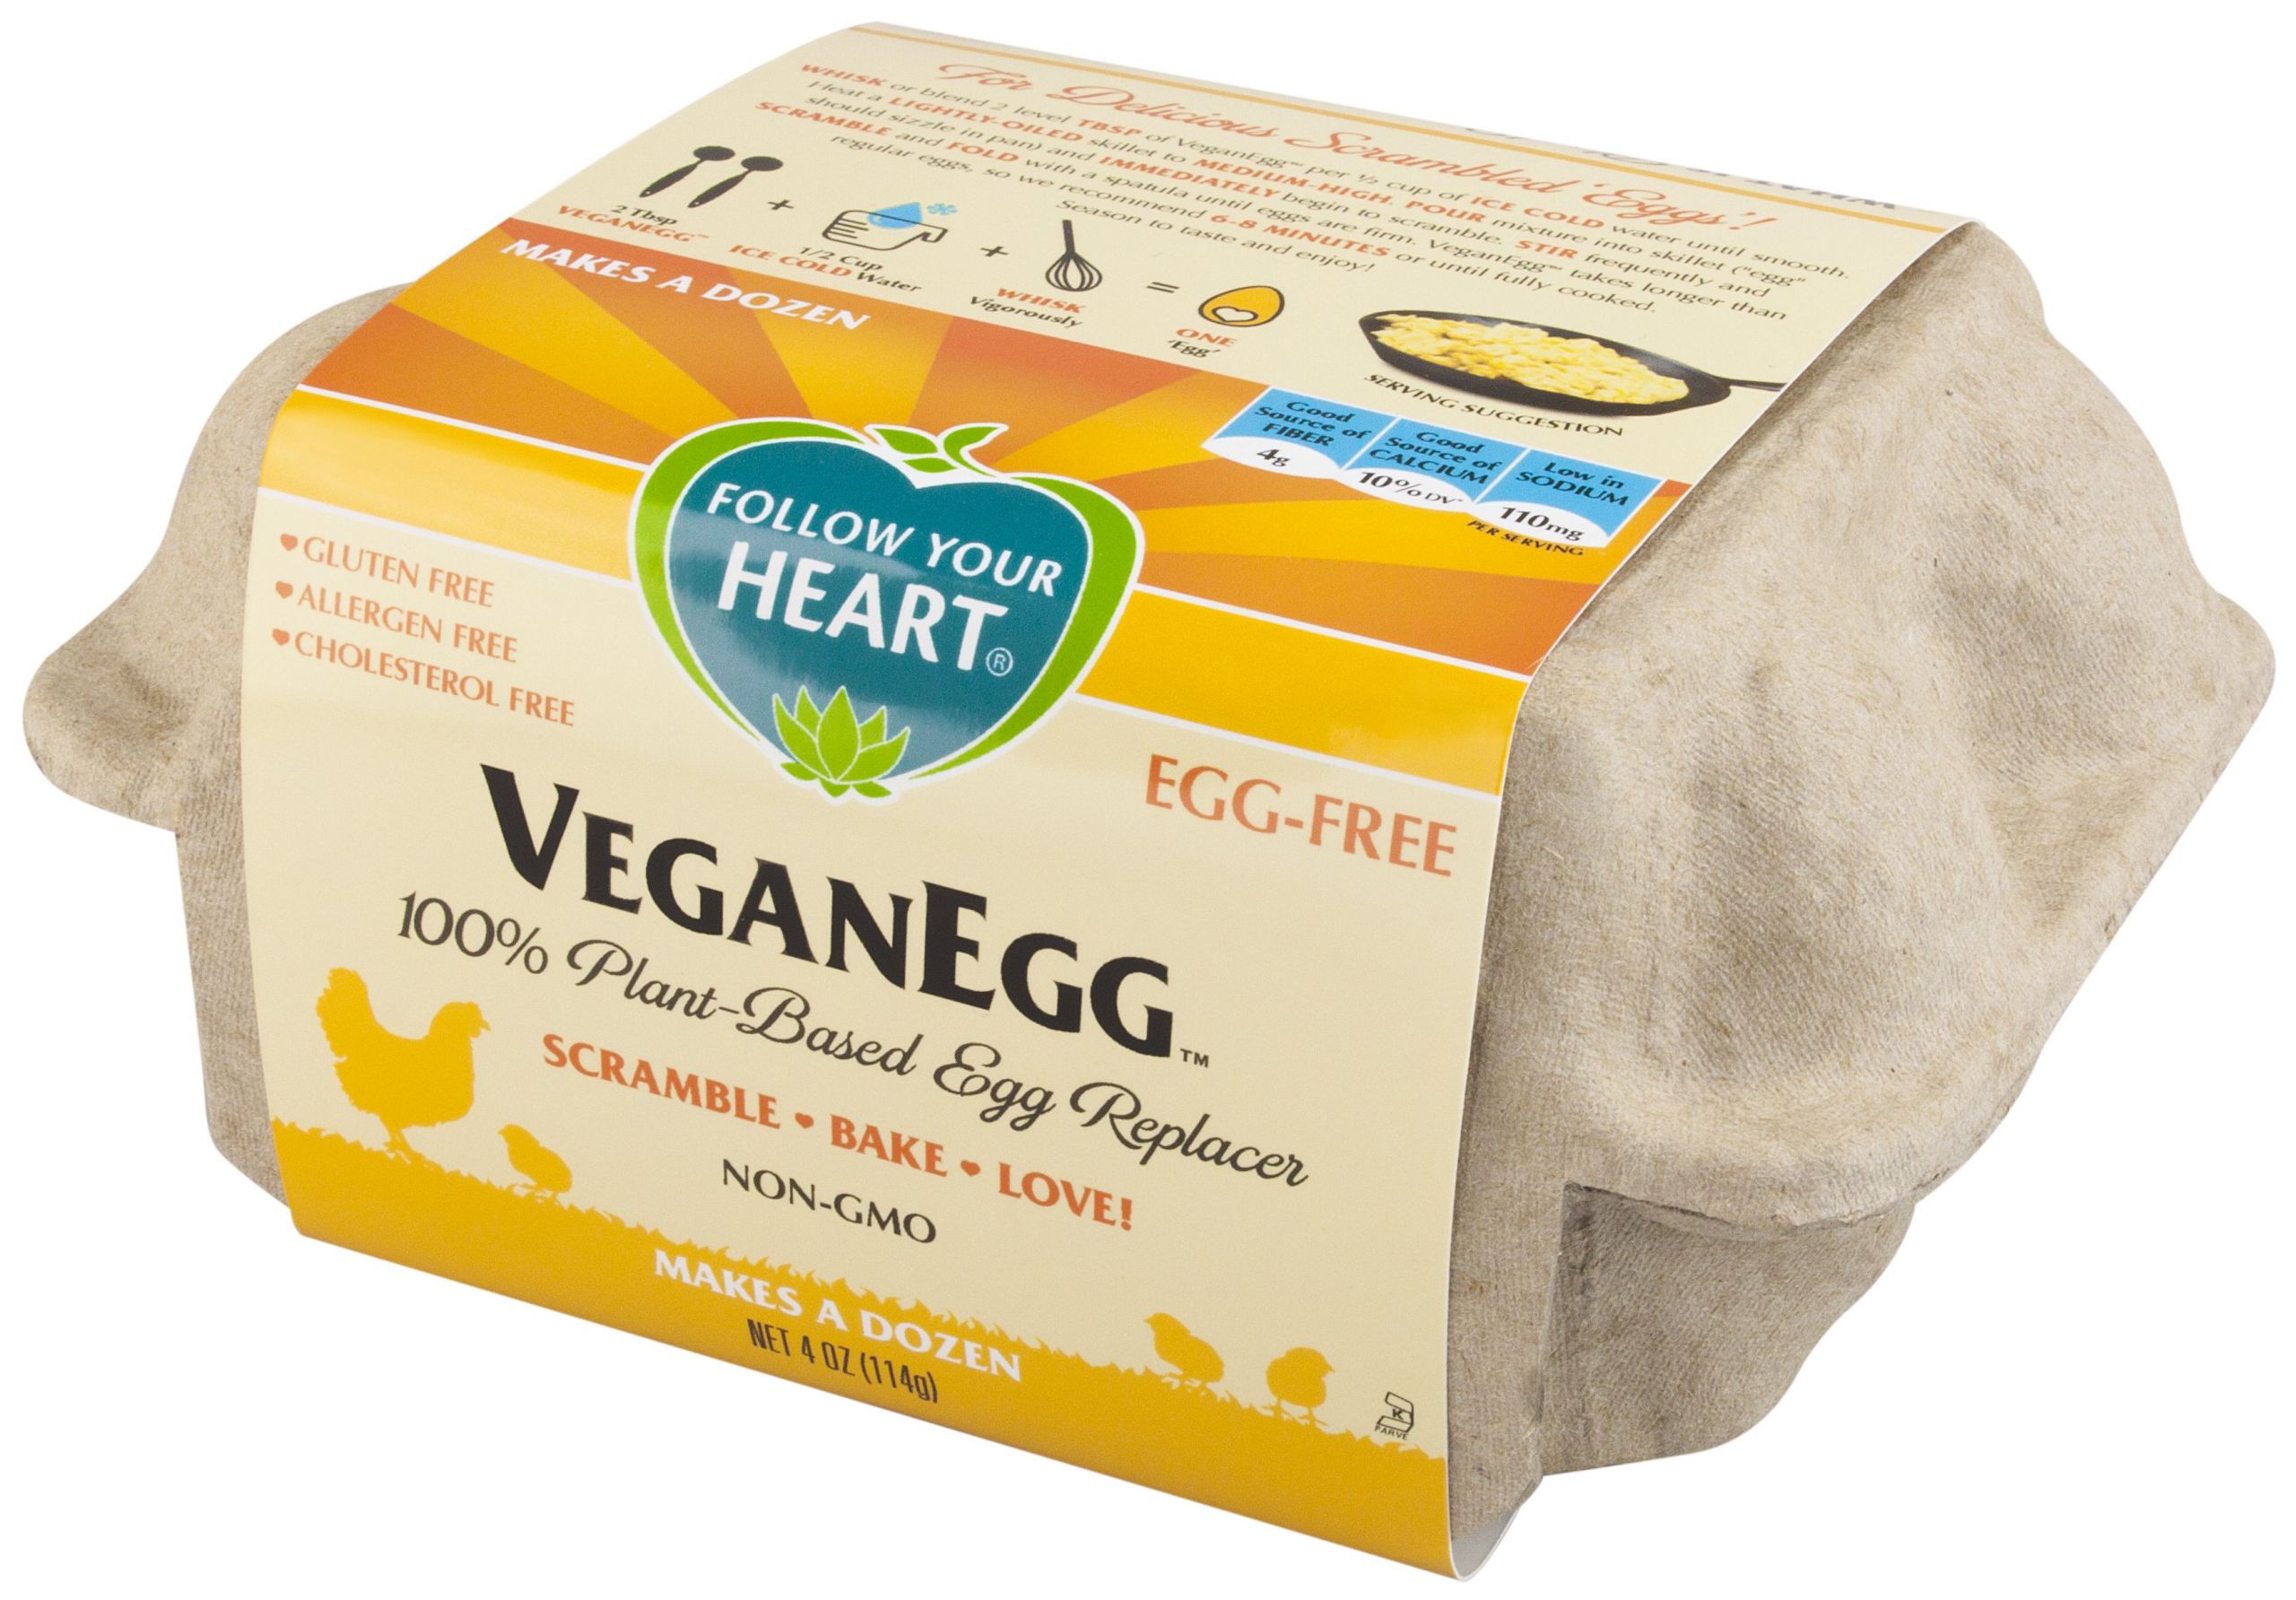 Follow Your Heart Vegan Egg Recipes
 Follow Your Heart Introduces Revolutionary Vegan Egg